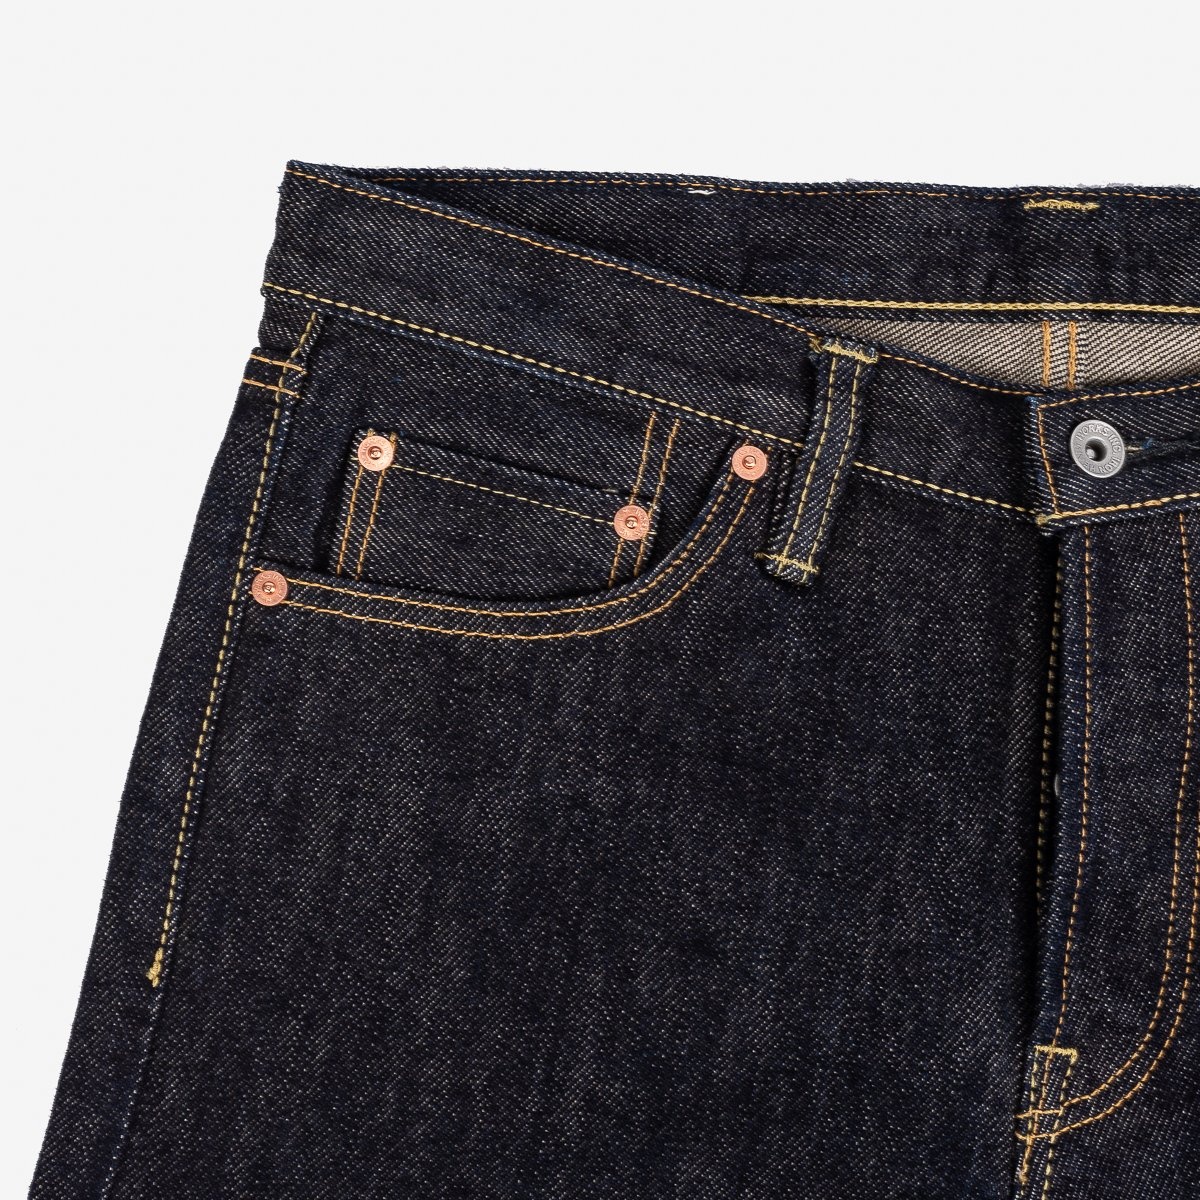 IH-666S-21 21oz Selvedge Denim Slim Straight Cut Jeans - Indigo - 6